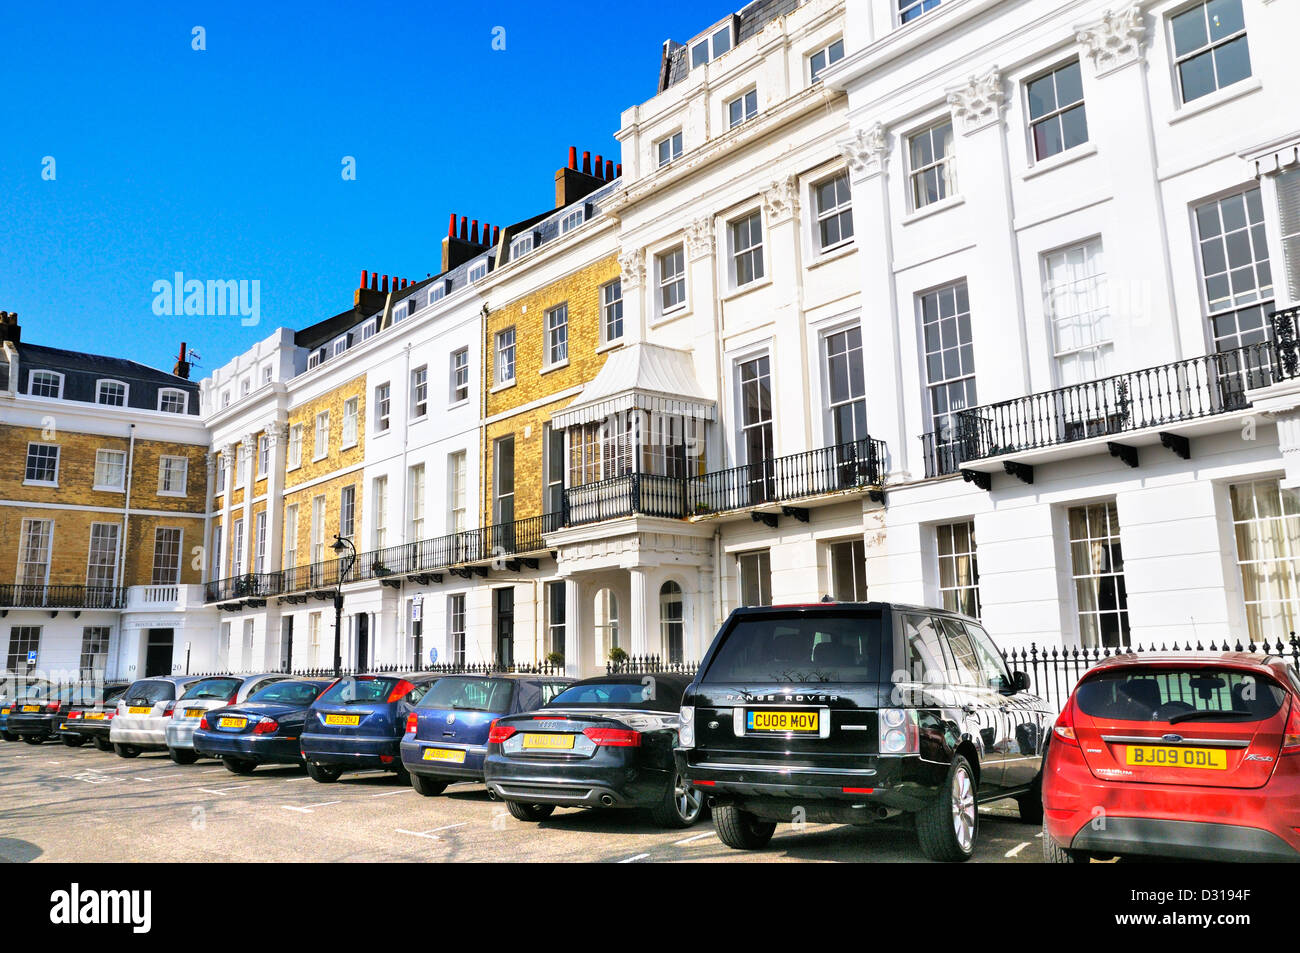 Sussex Square, Kemp Town, Brighton, East Sussex, UK Stockfoto